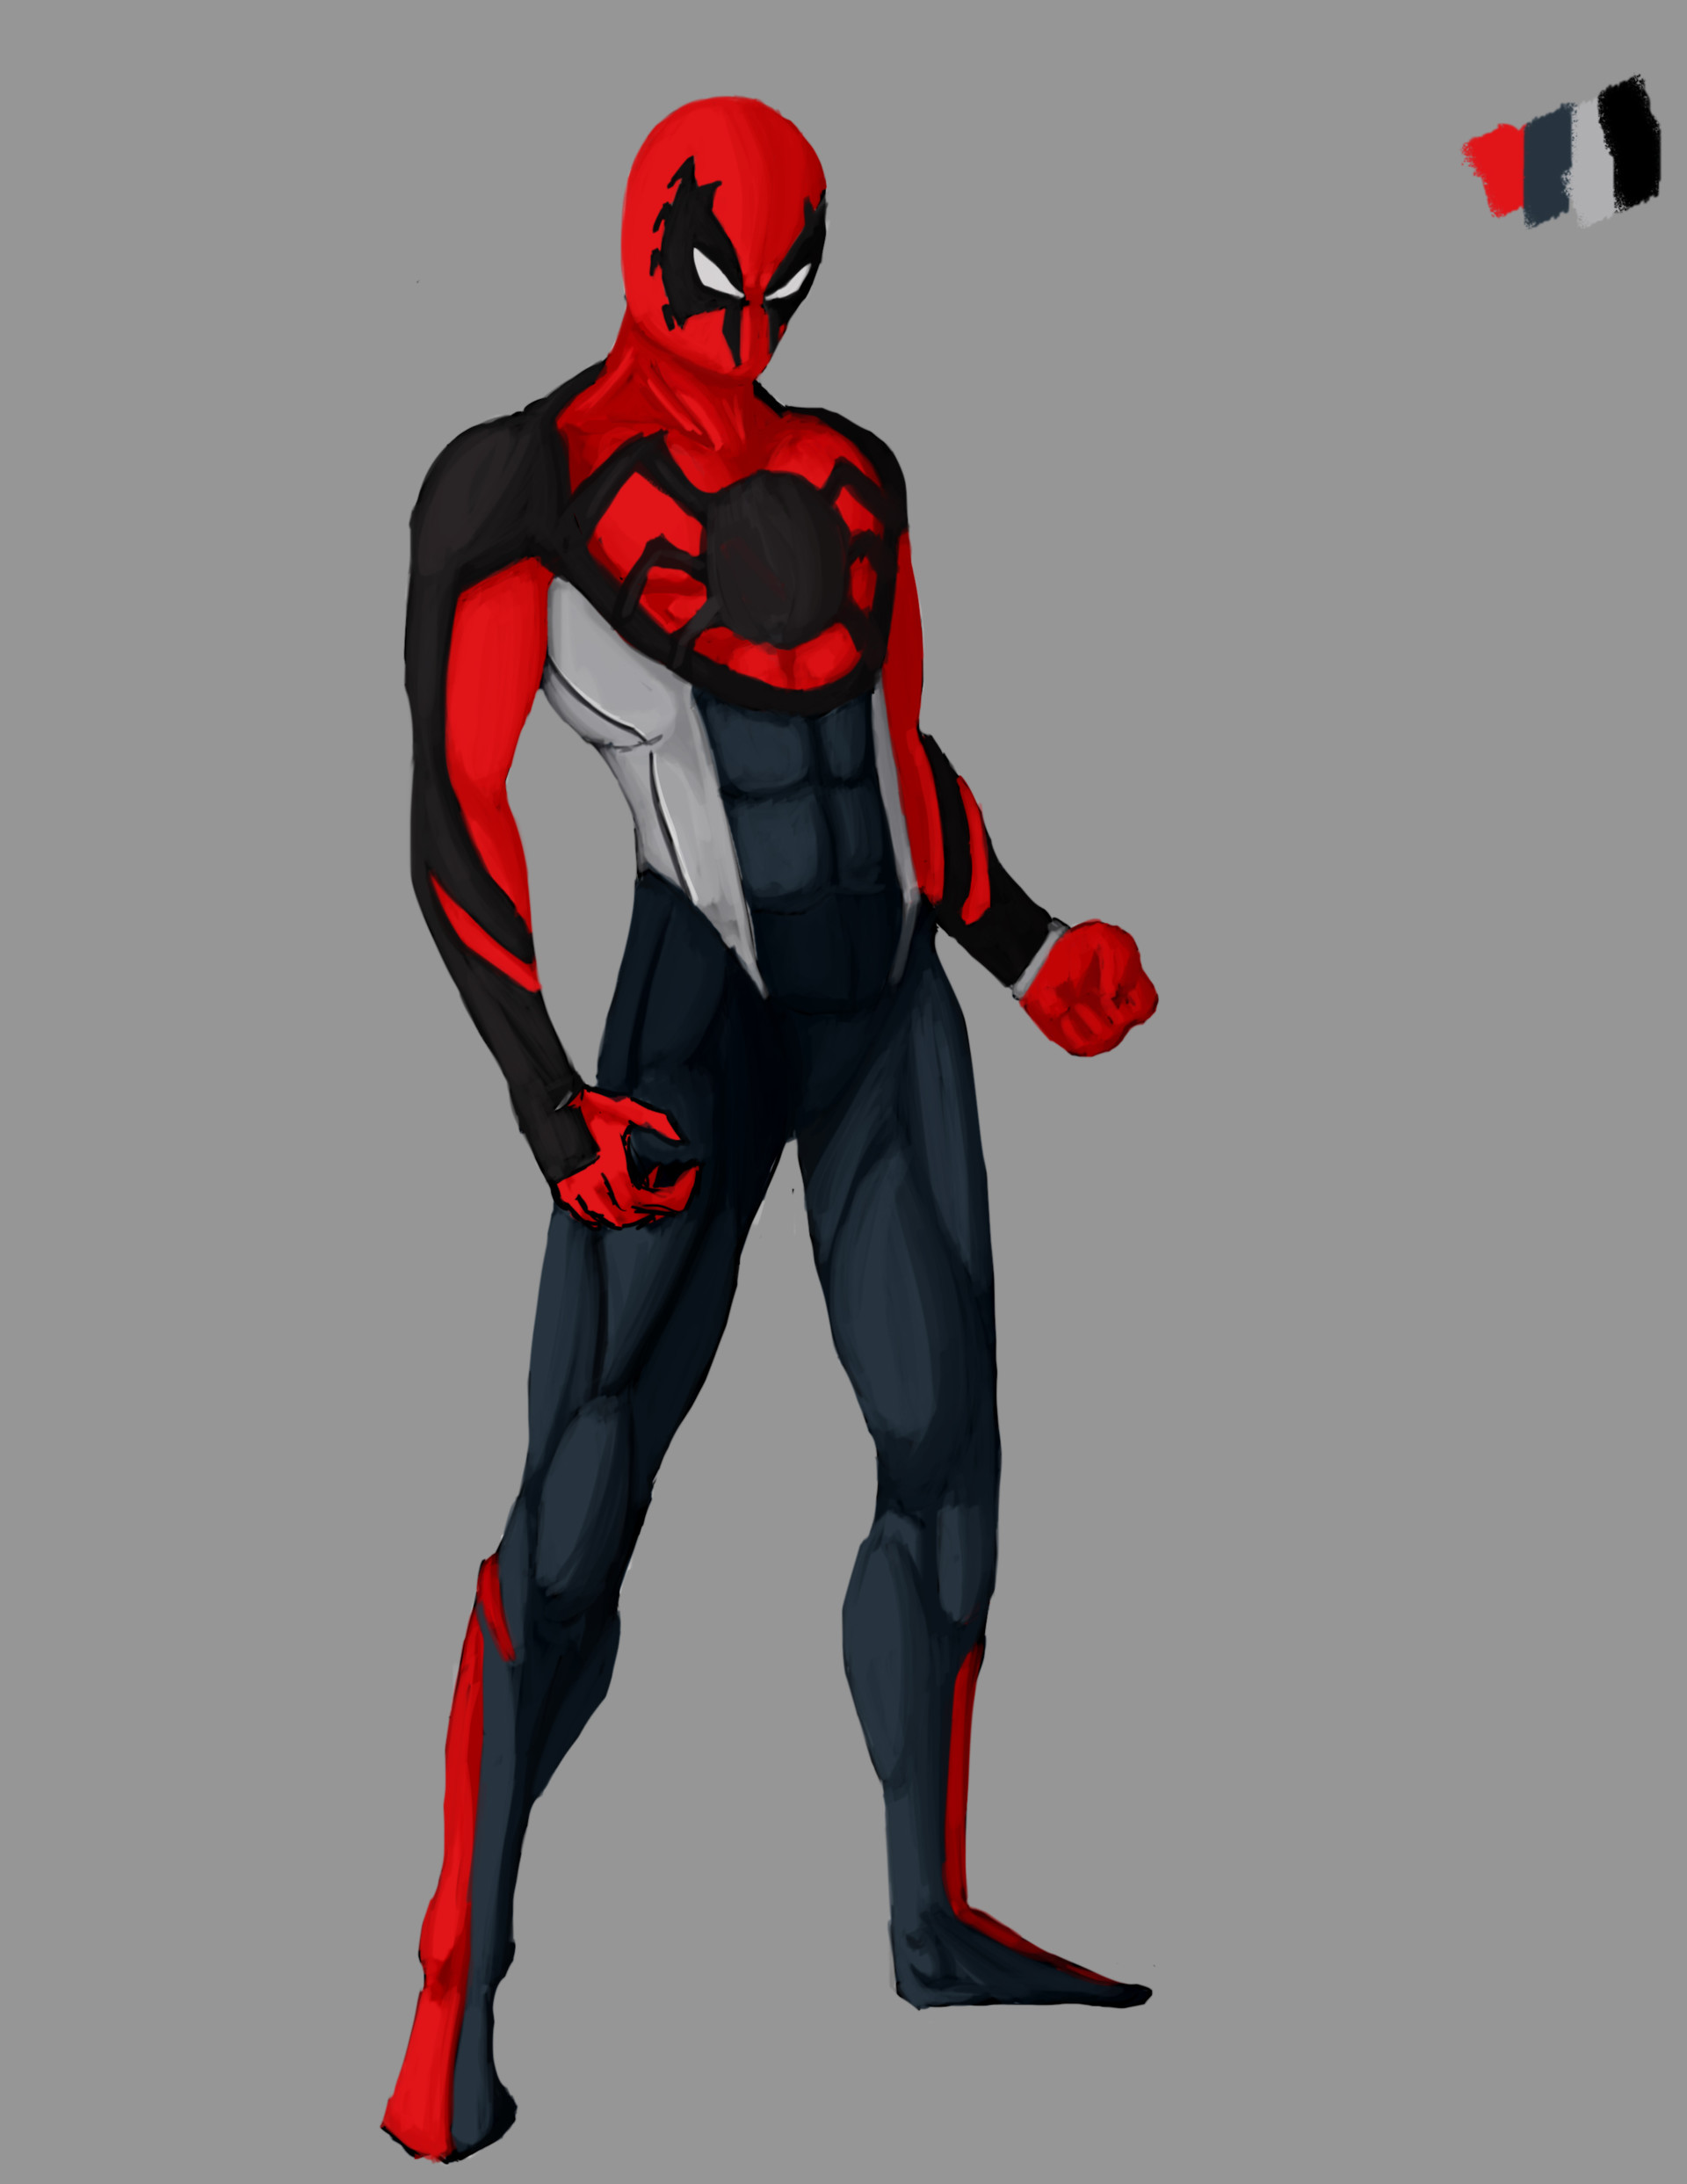 spiderman costume concept art